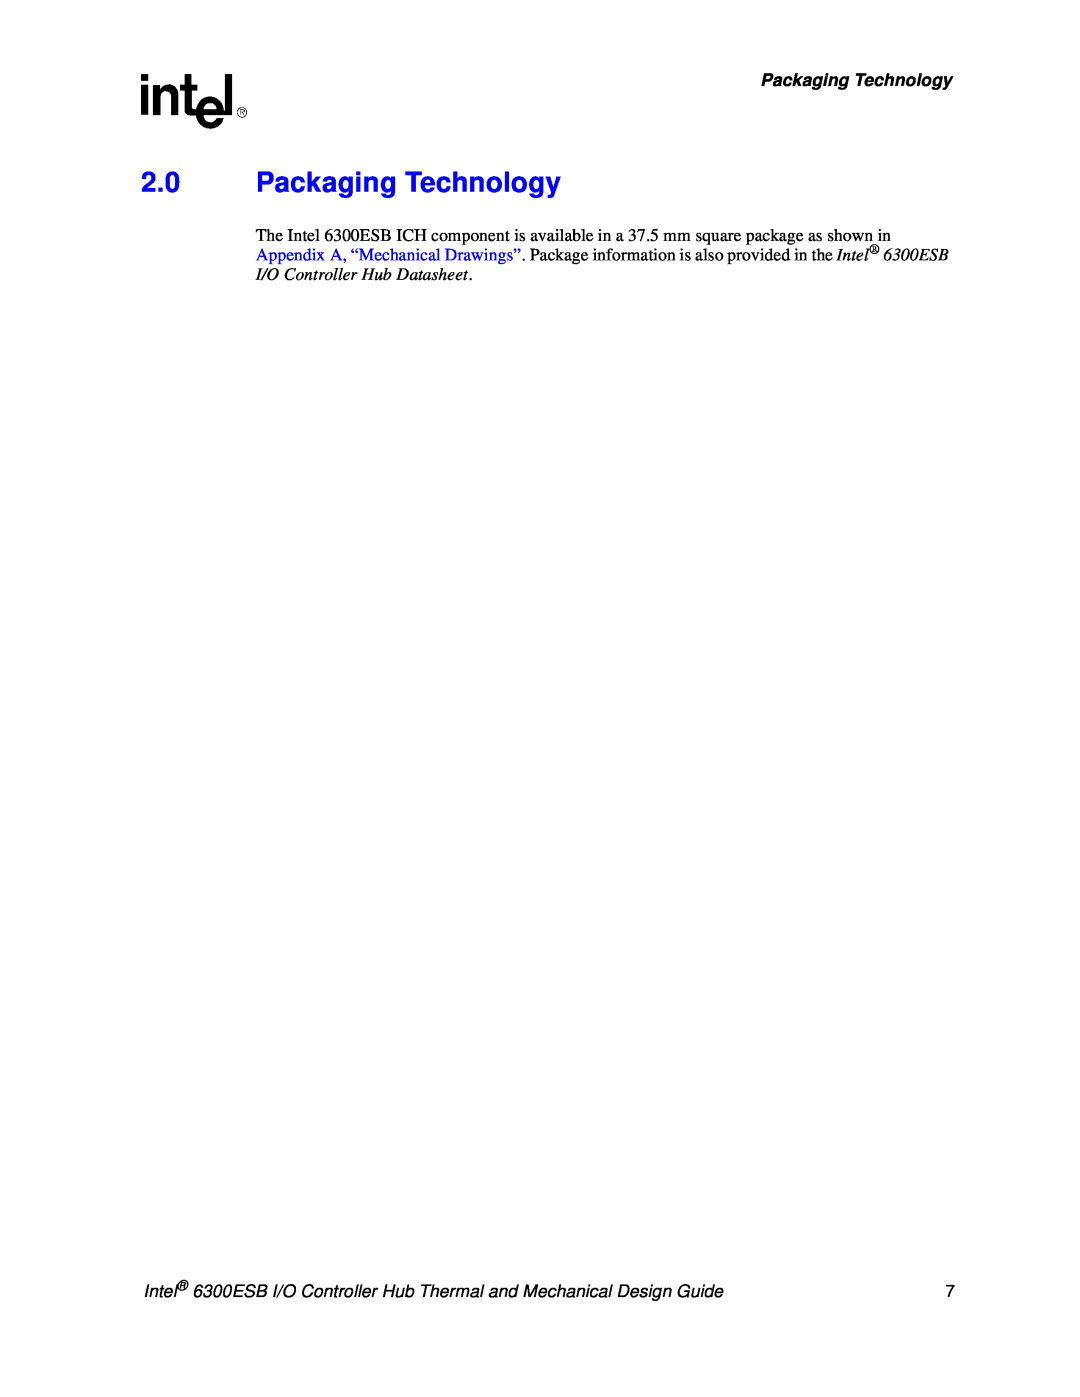 Intel 6300ESB manual 2.0Packaging Technology 